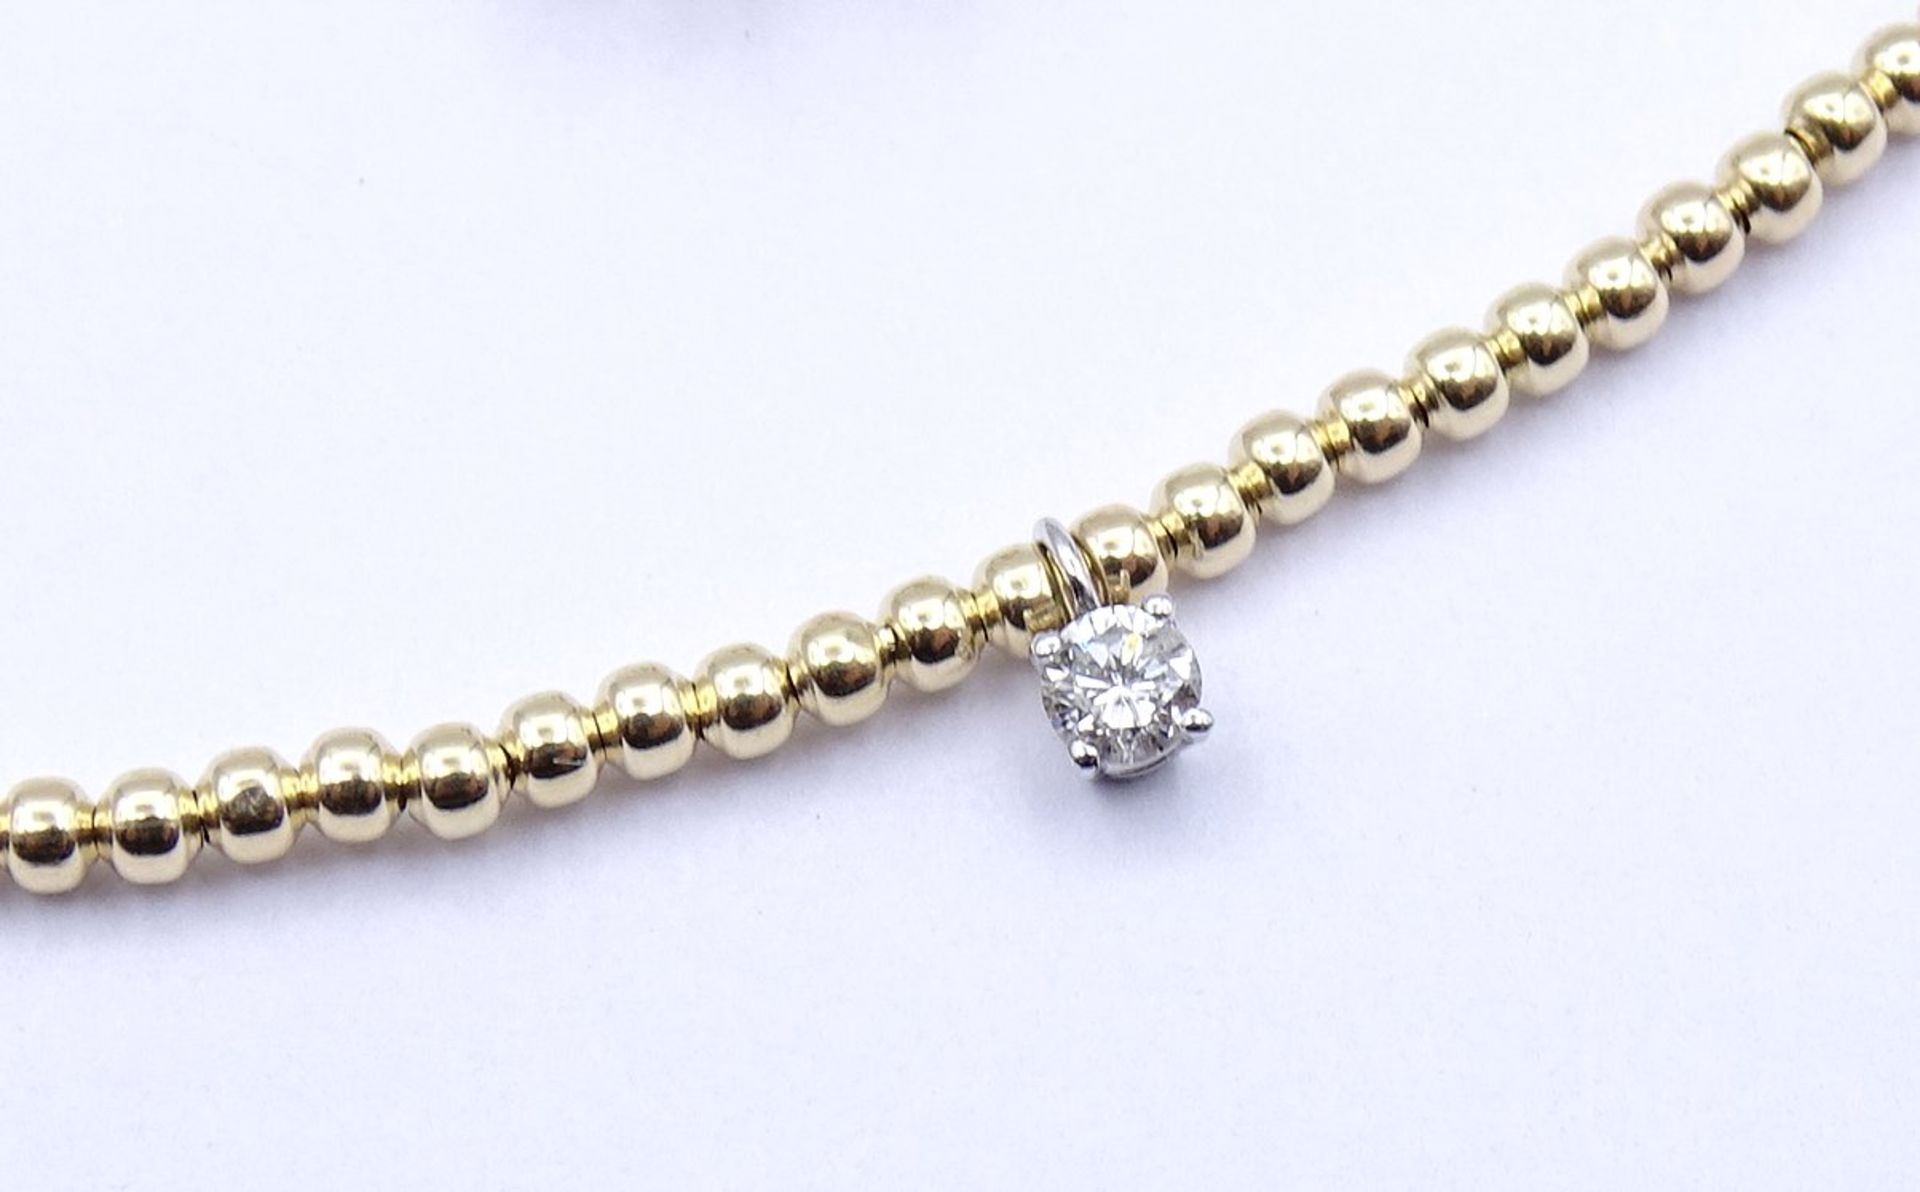 Halskette, GG 585/000 mit Diamant 0,07ct., L. 40,5cm, 1,45g. - Image 3 of 6